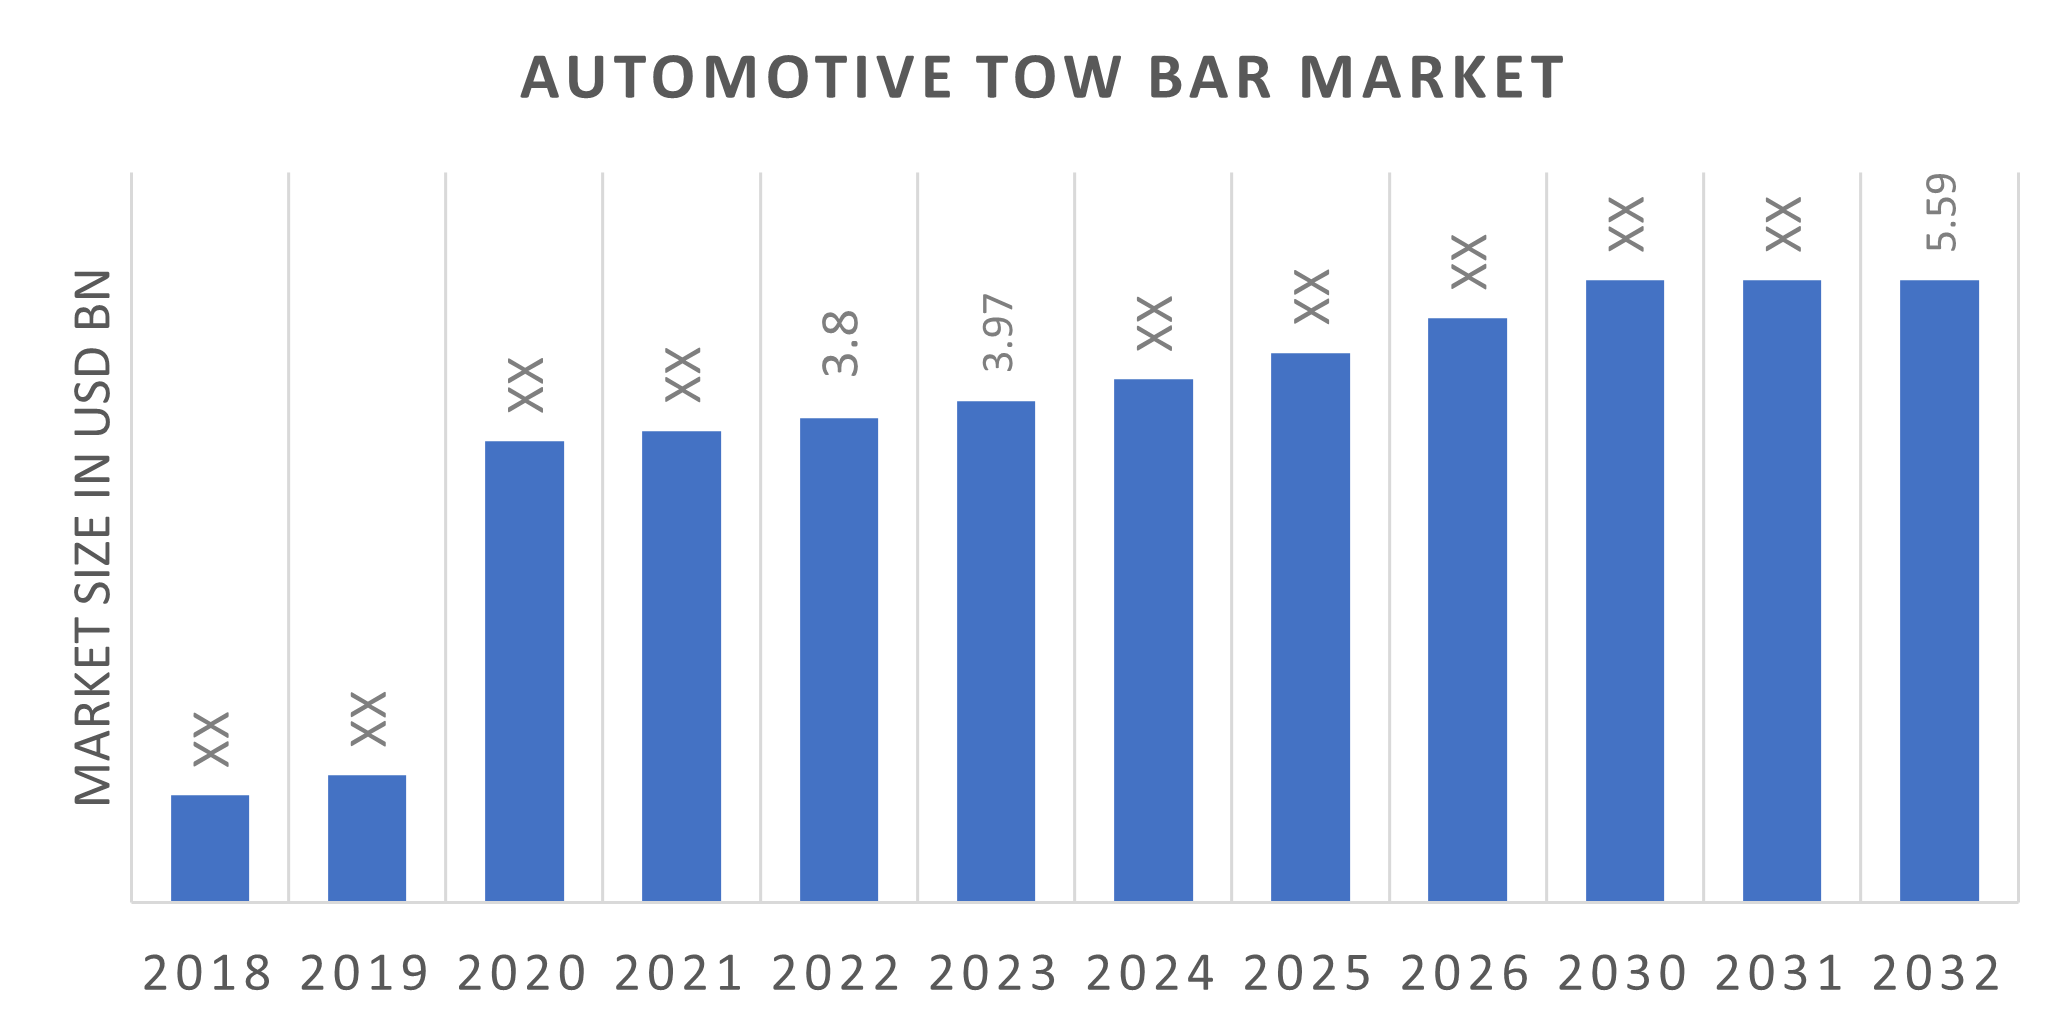 Global Automotive Tow Bar Market Overview